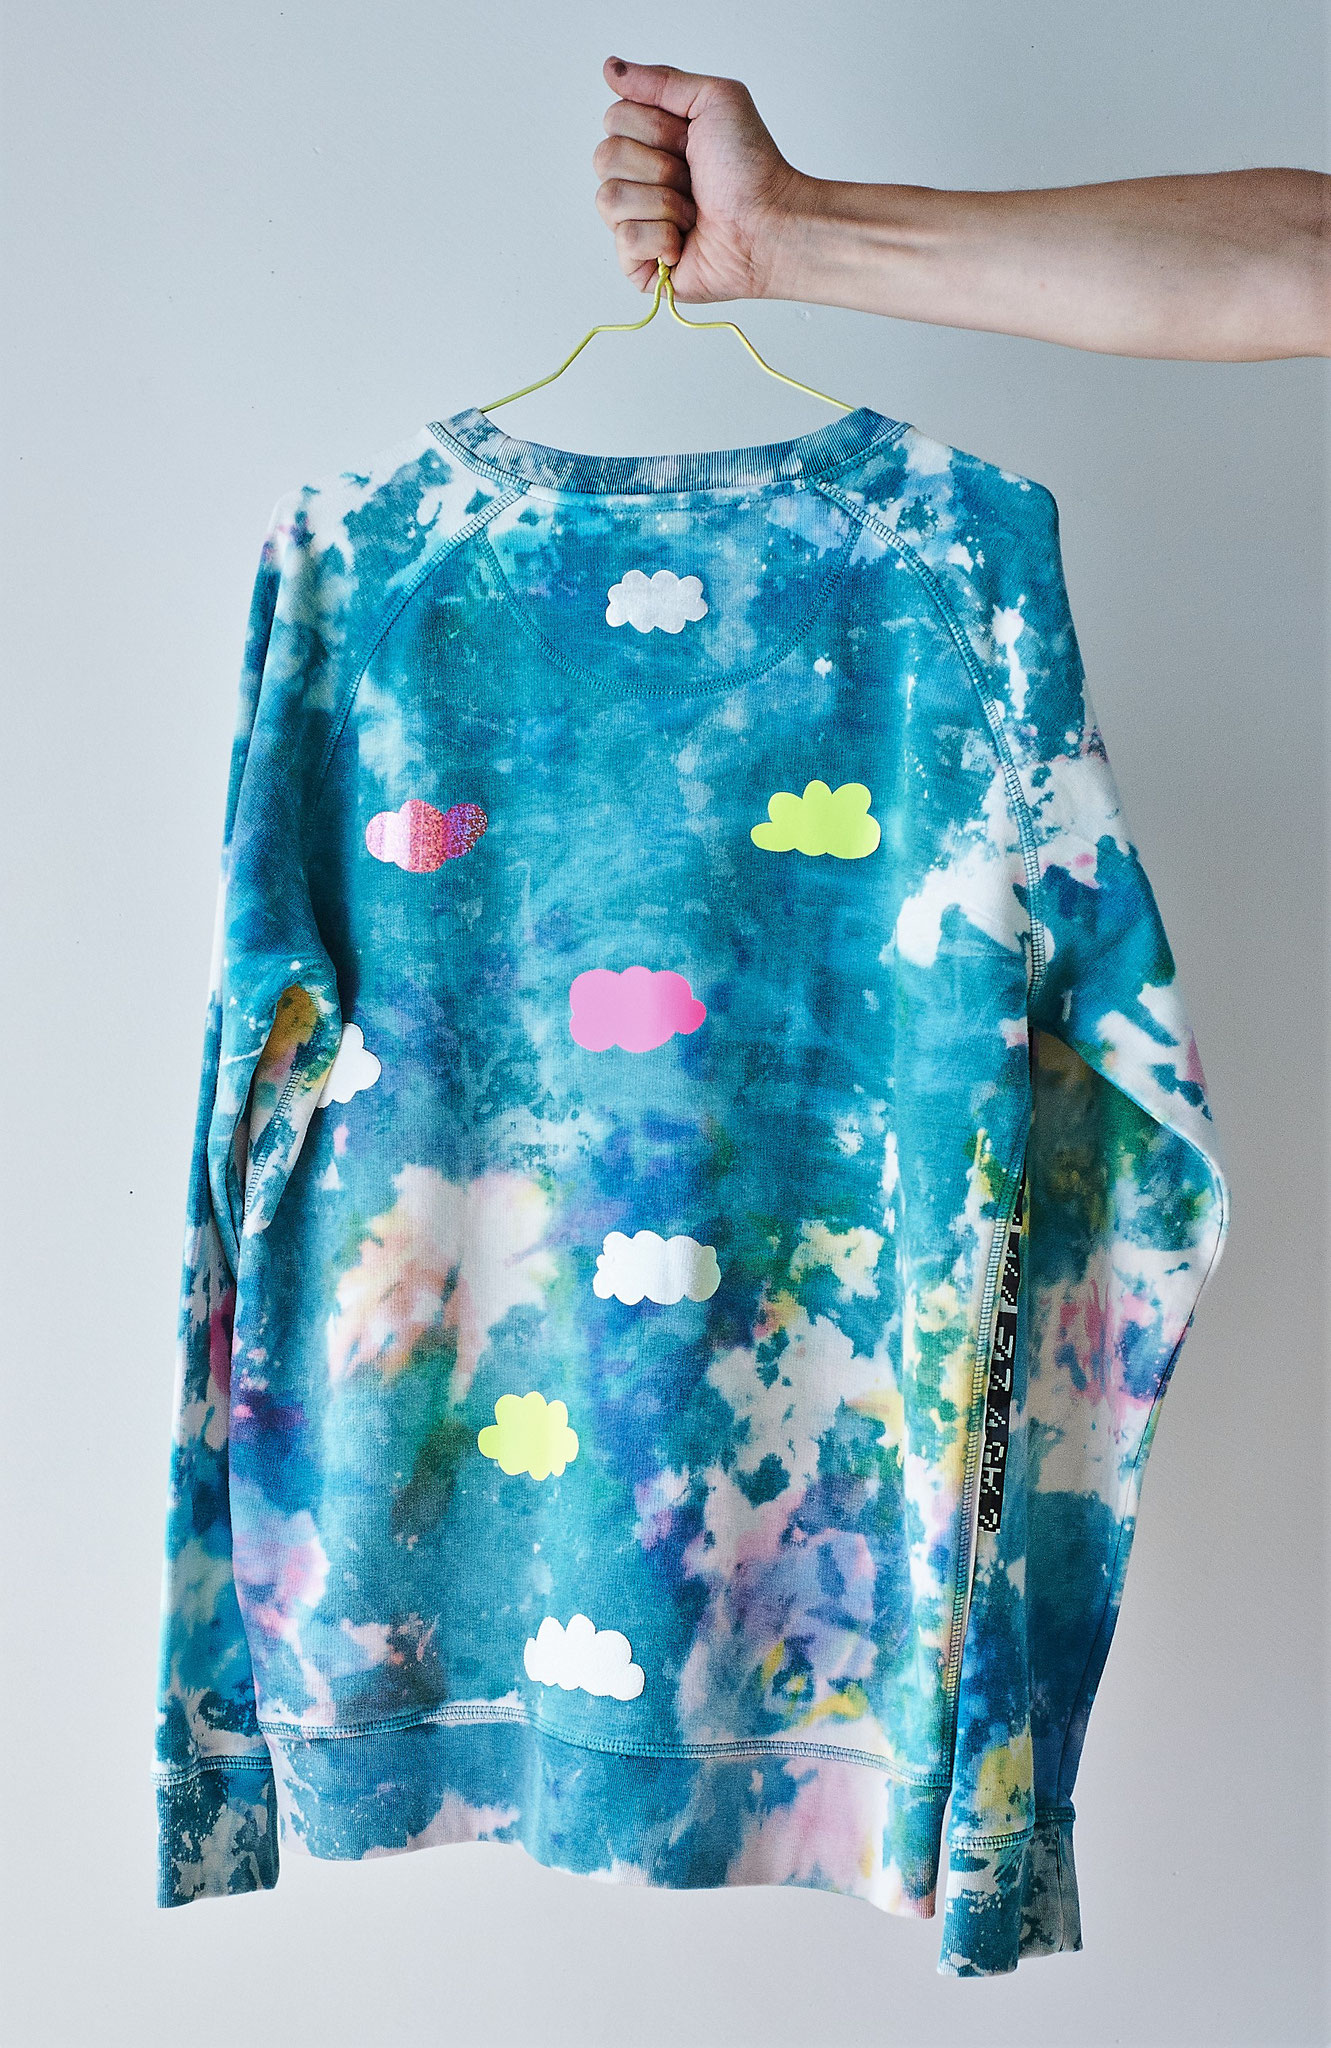 Celestial Cloud Castle Sweater, Textildruck, Thermofolie, Swarovski-Kristalle, Pin, Größe L, 2021